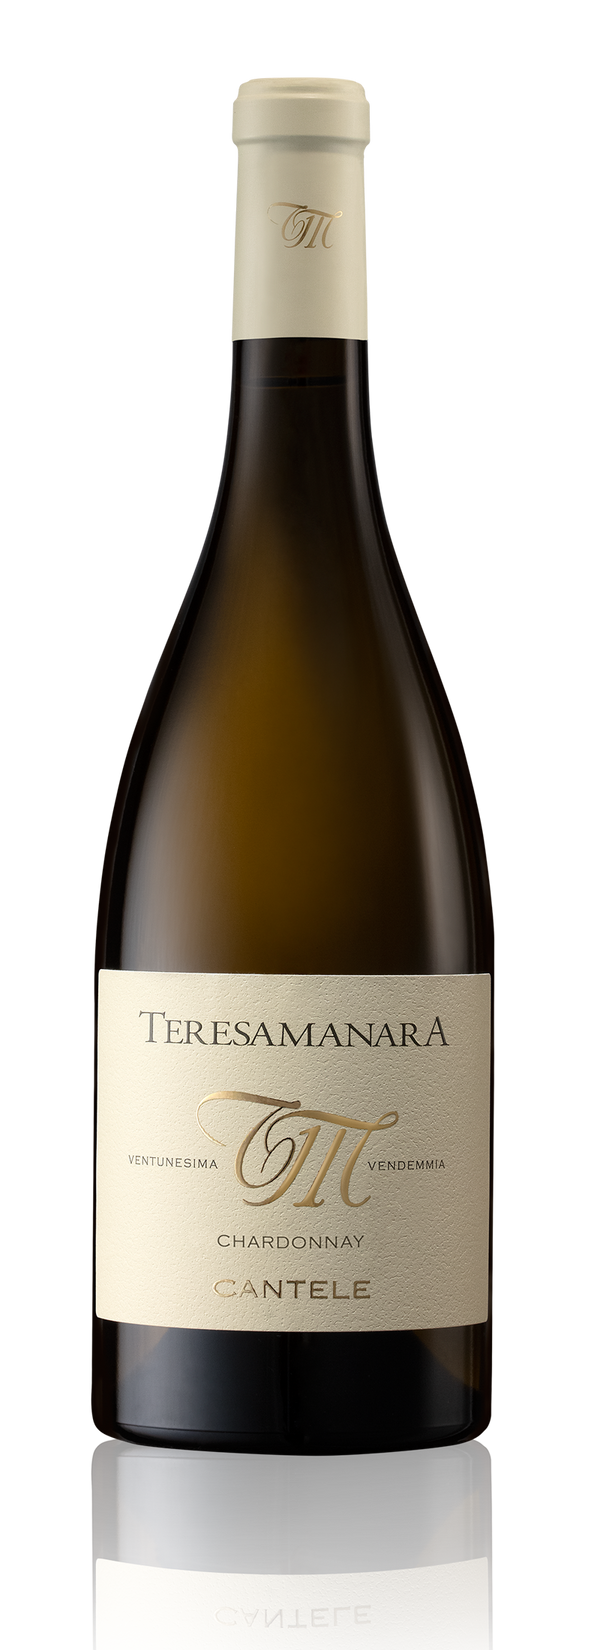 Teresa Manara IGT Salento Chardonnay 2020 - Cantele